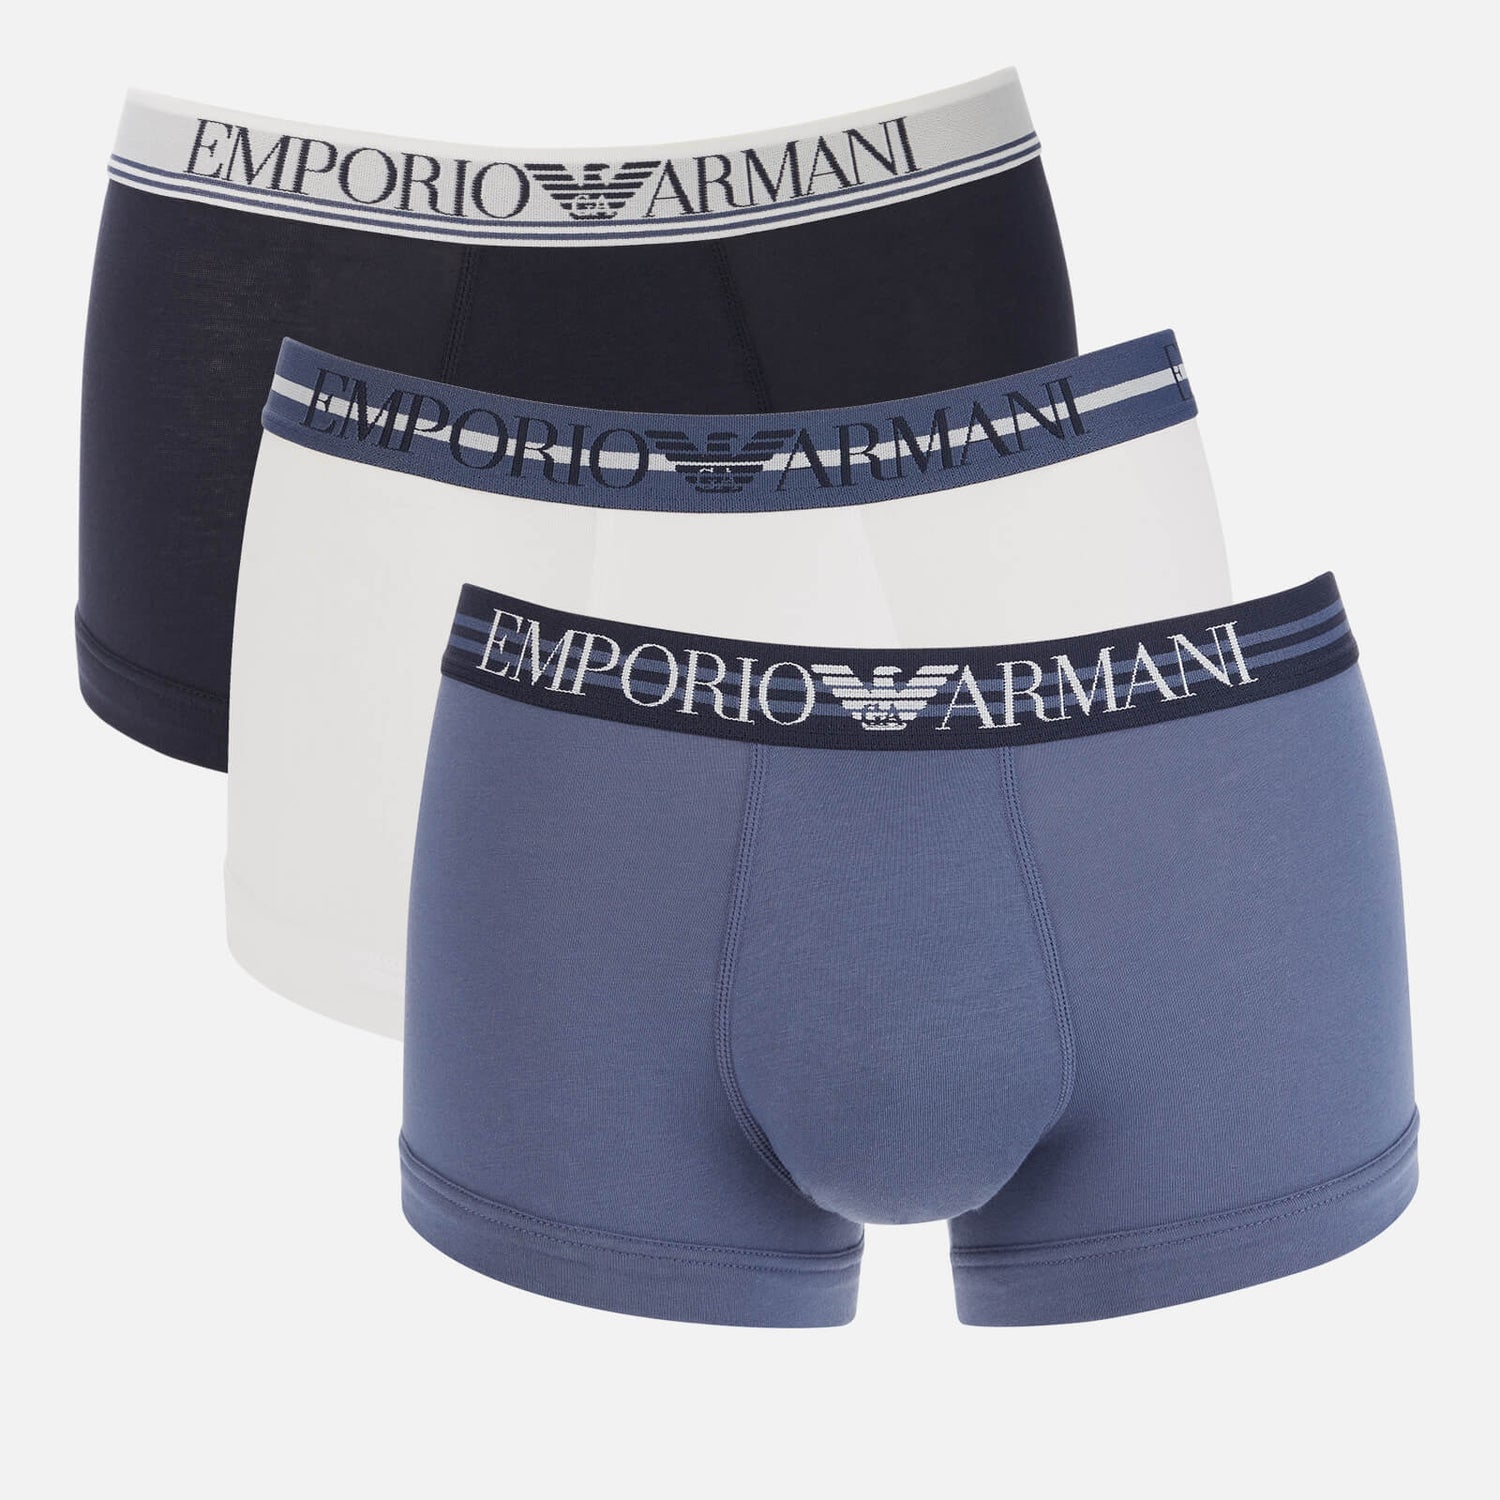 Emporio Armani Men's 3-Pack Mixed Waistband Trunks - Marine/White/Indigo - S